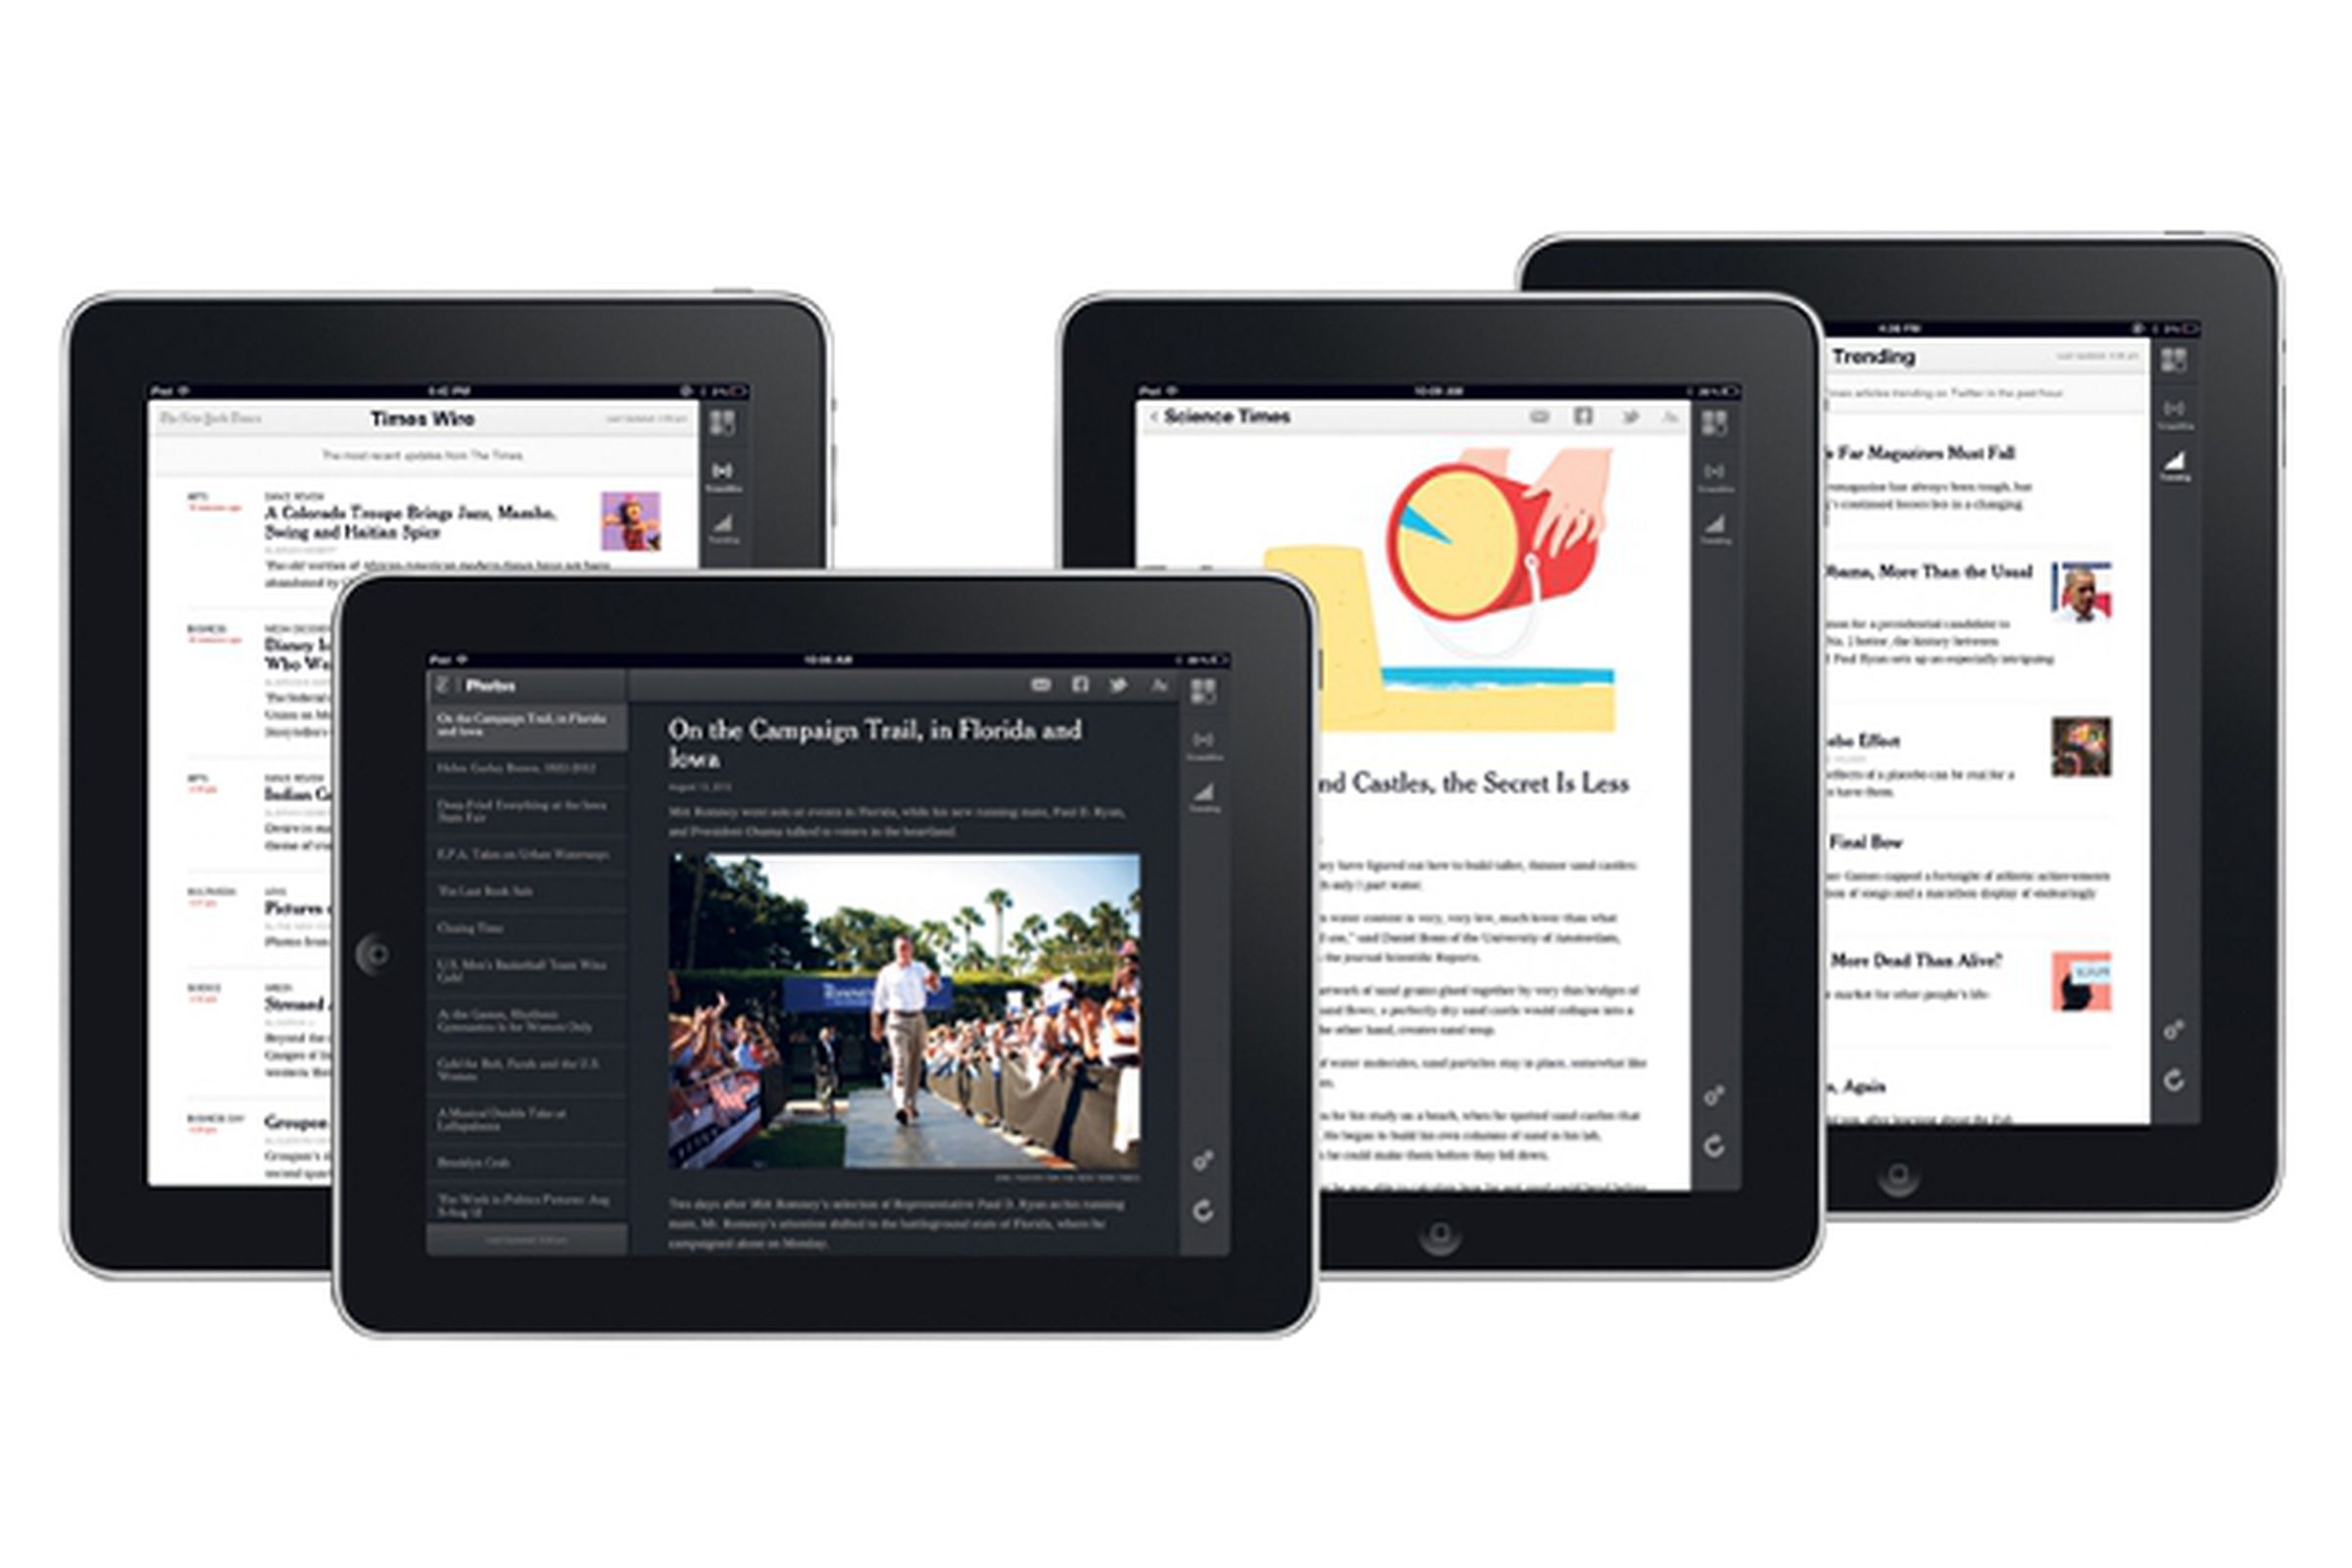 The New York Times iPad web app